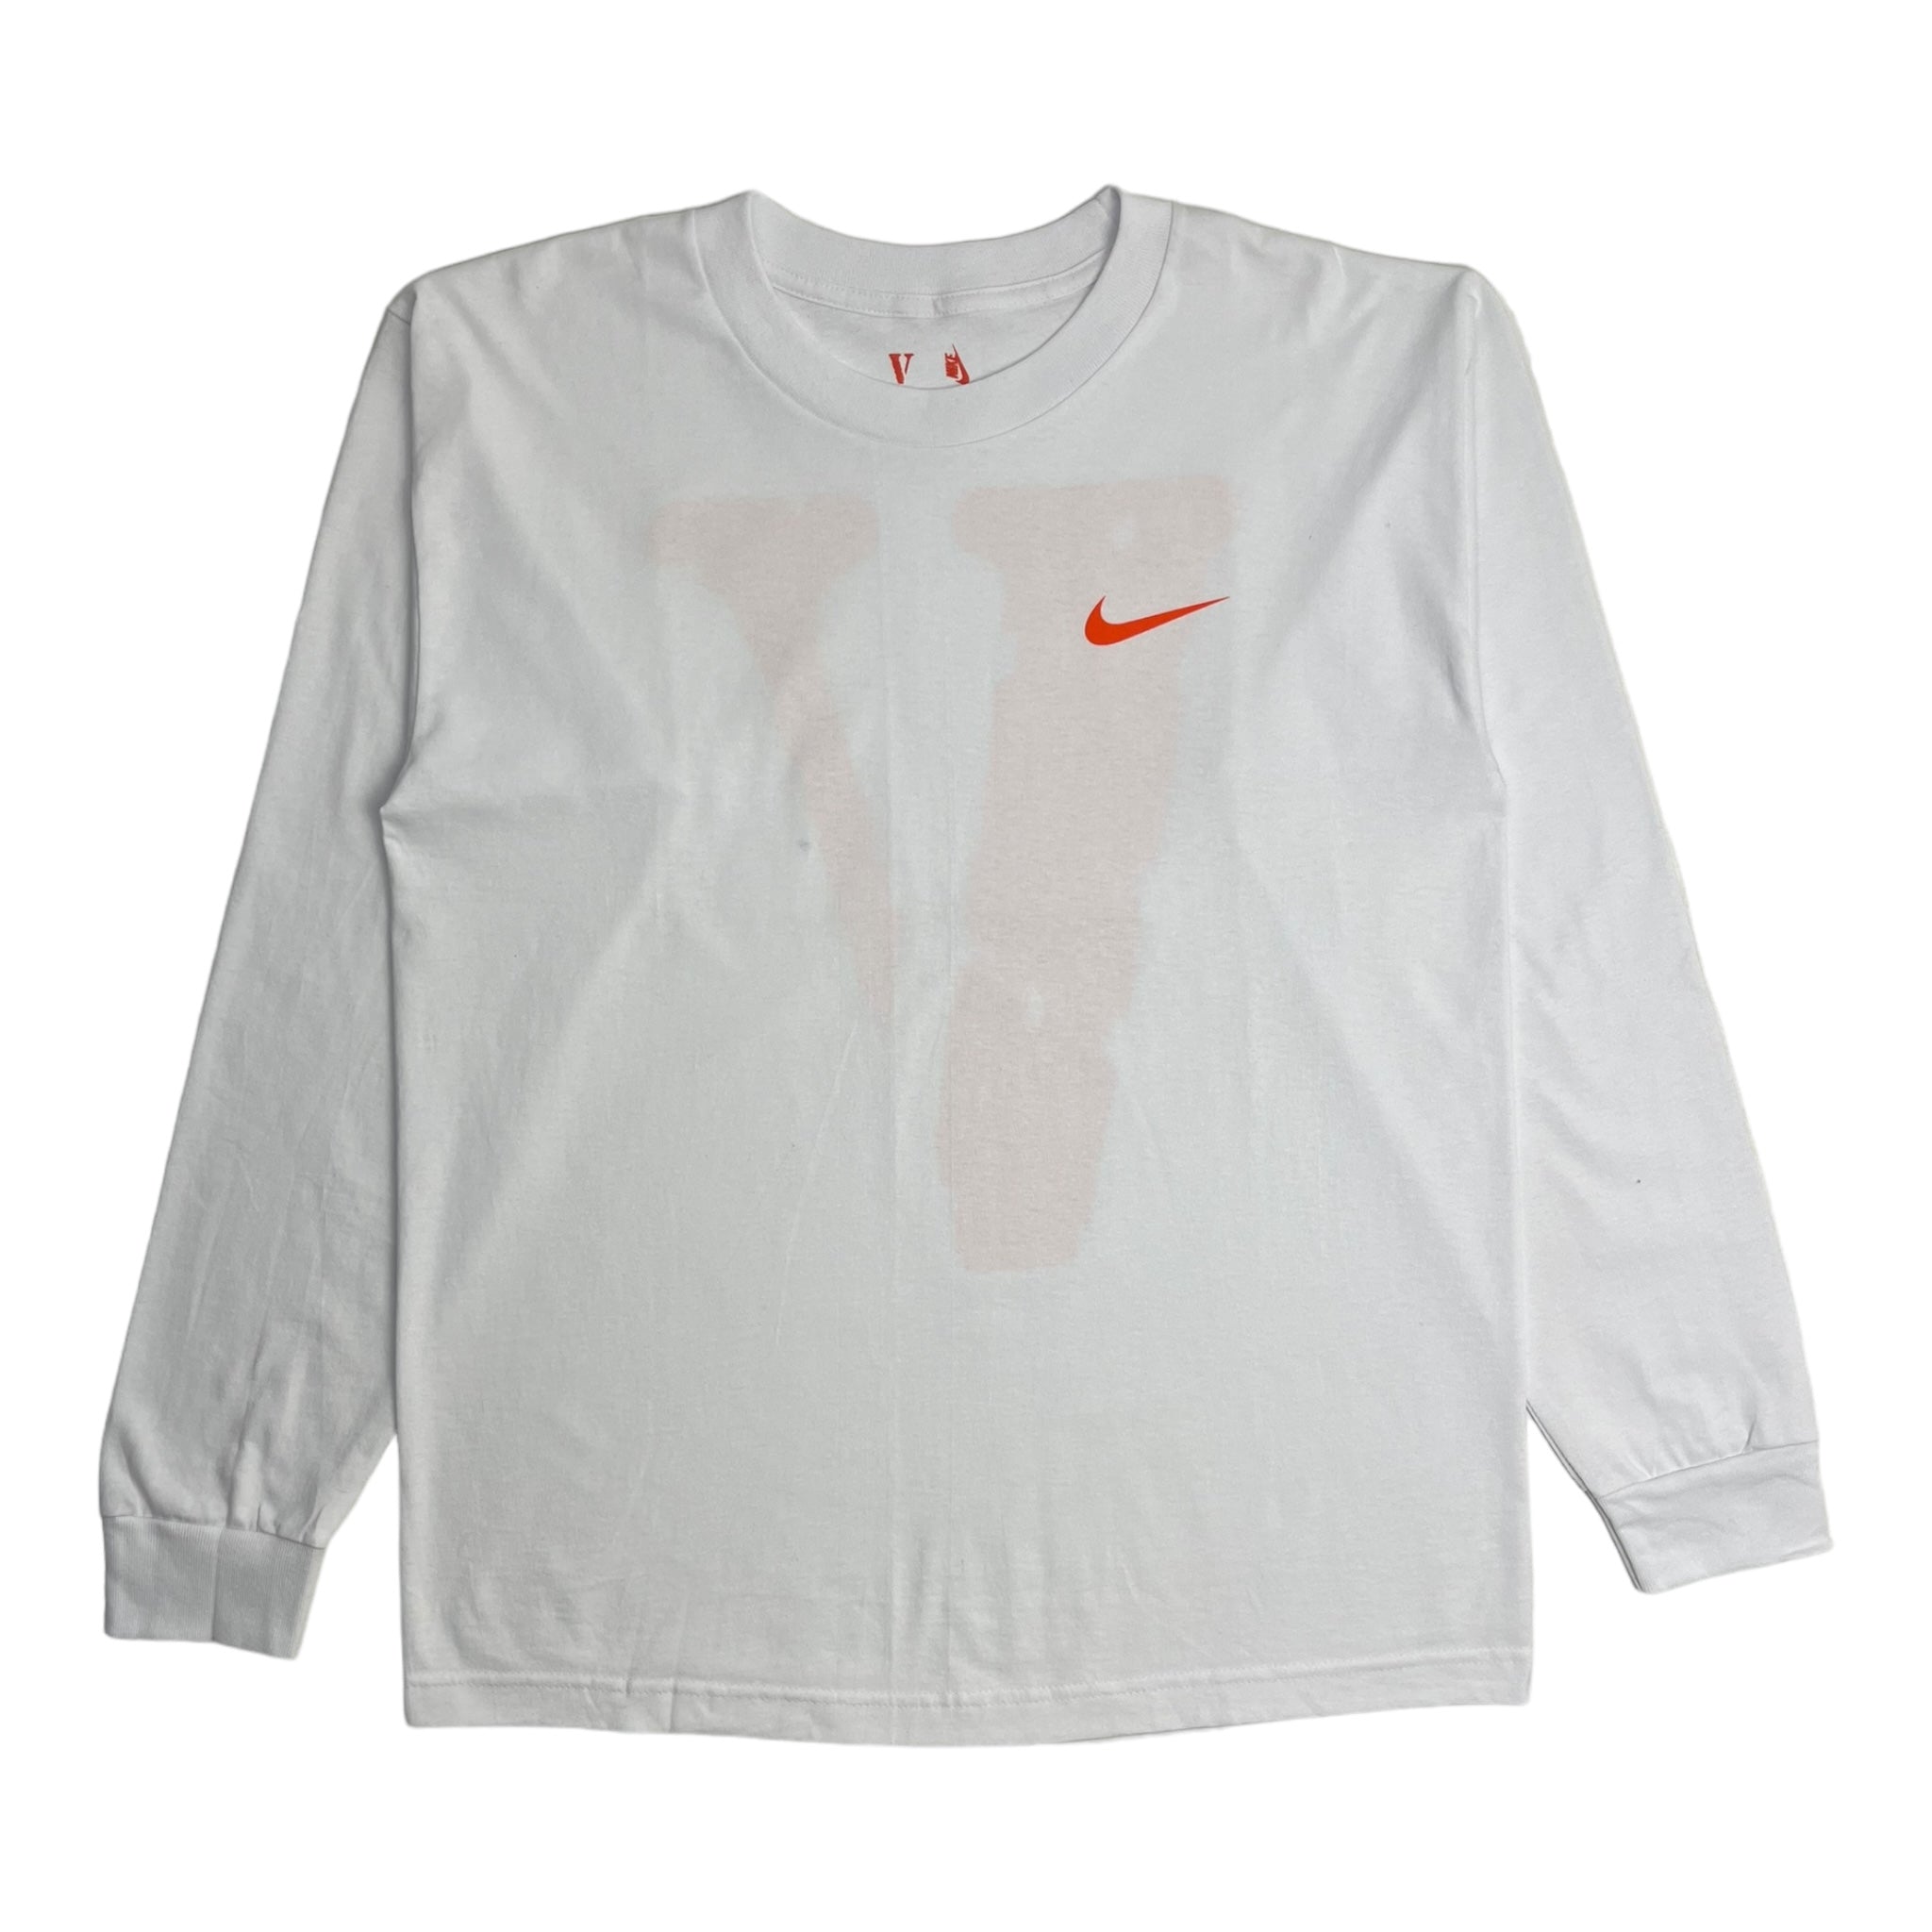 Vlone x Nike Long Sleeve Shirt